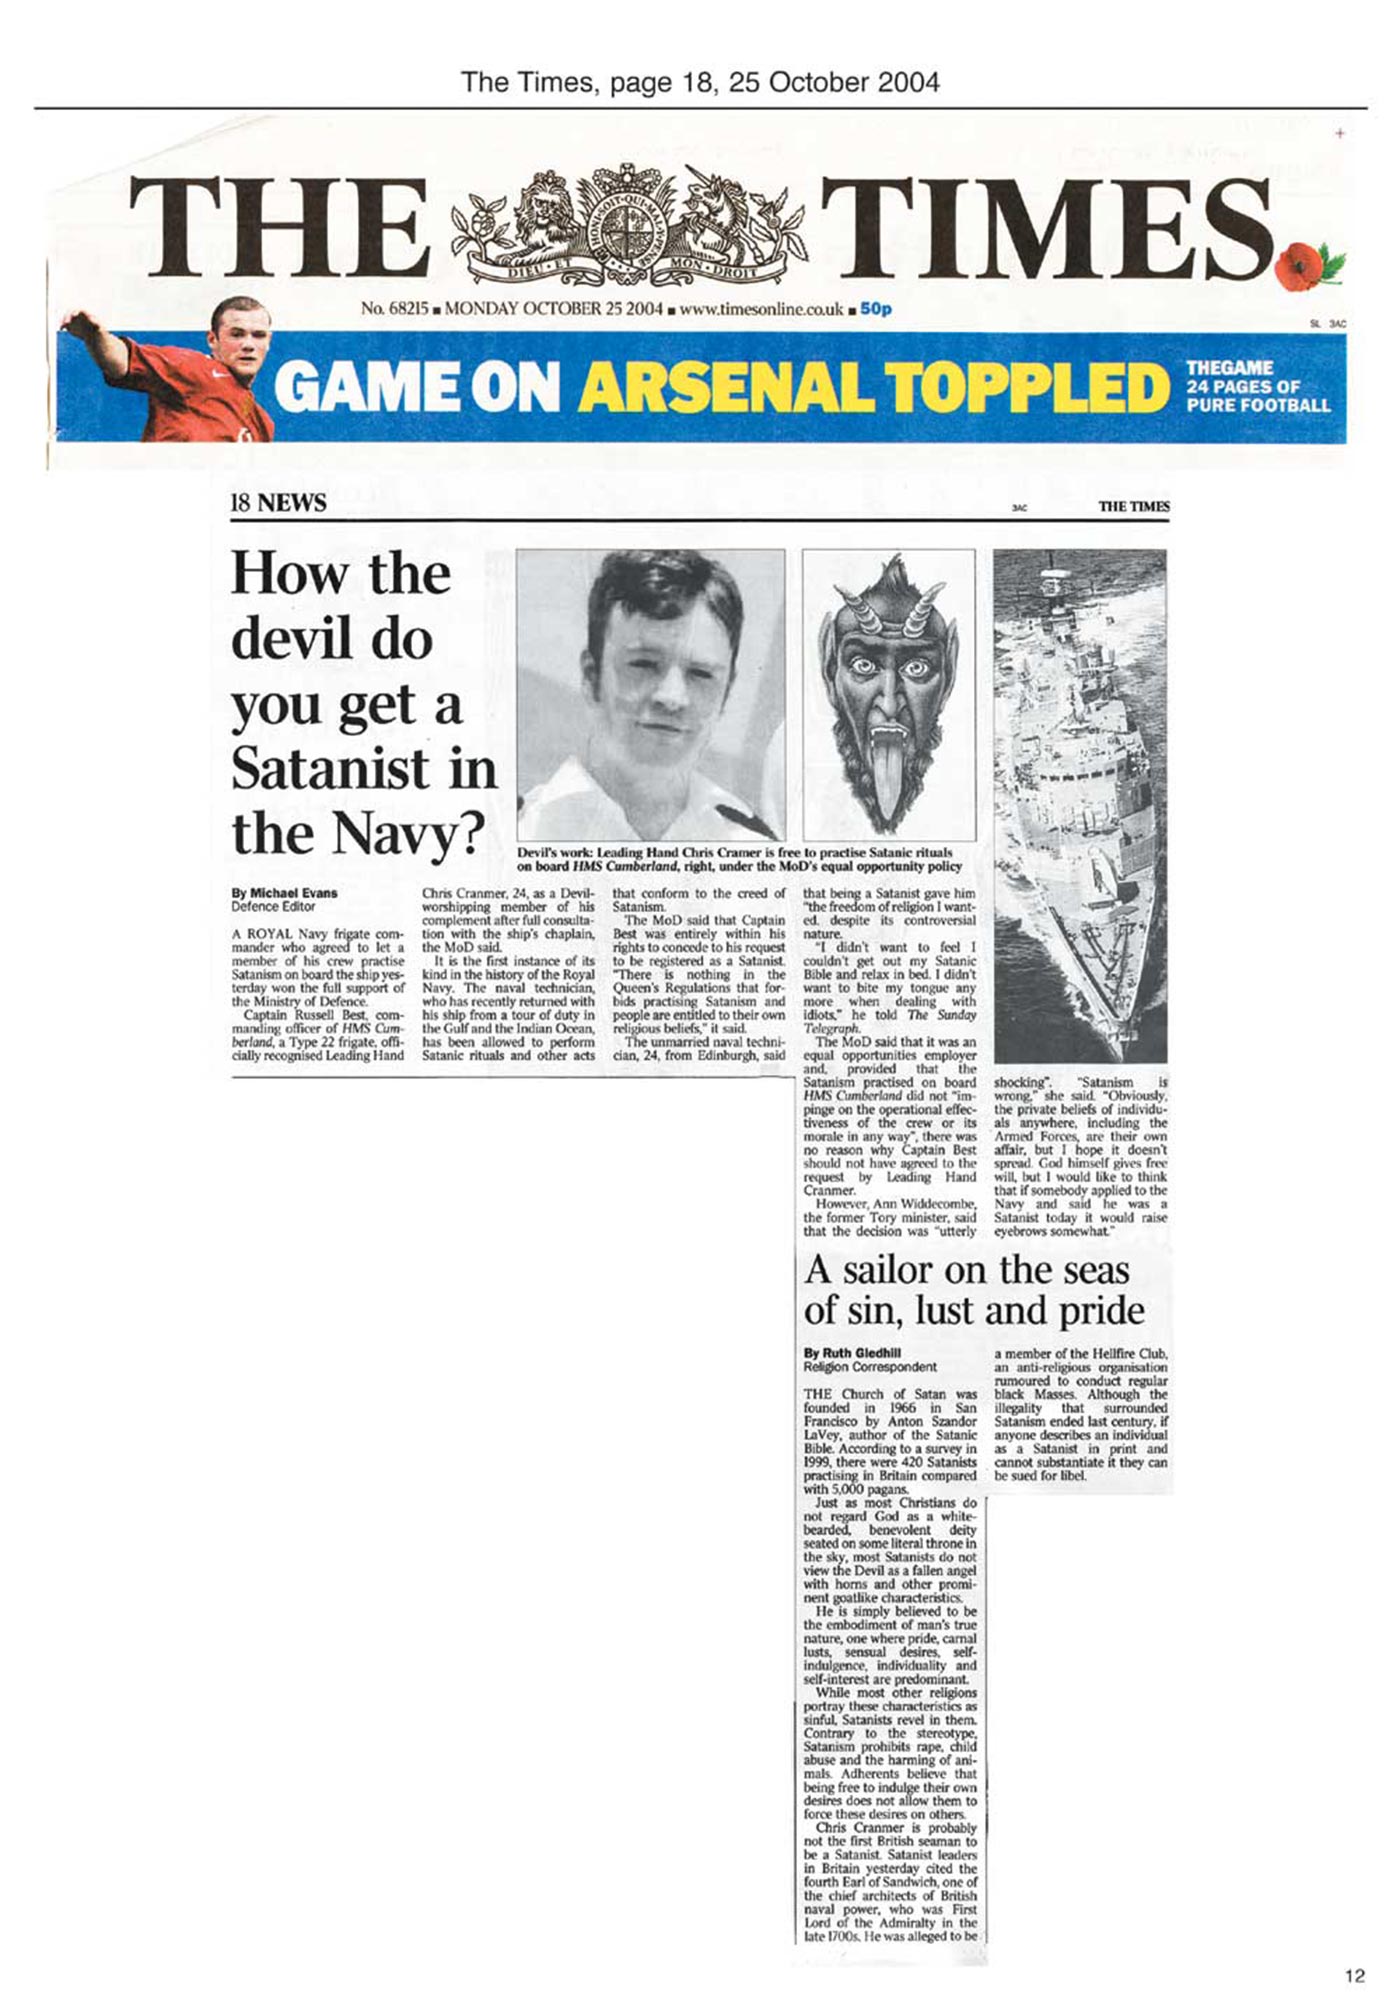 Daily Star October 2004